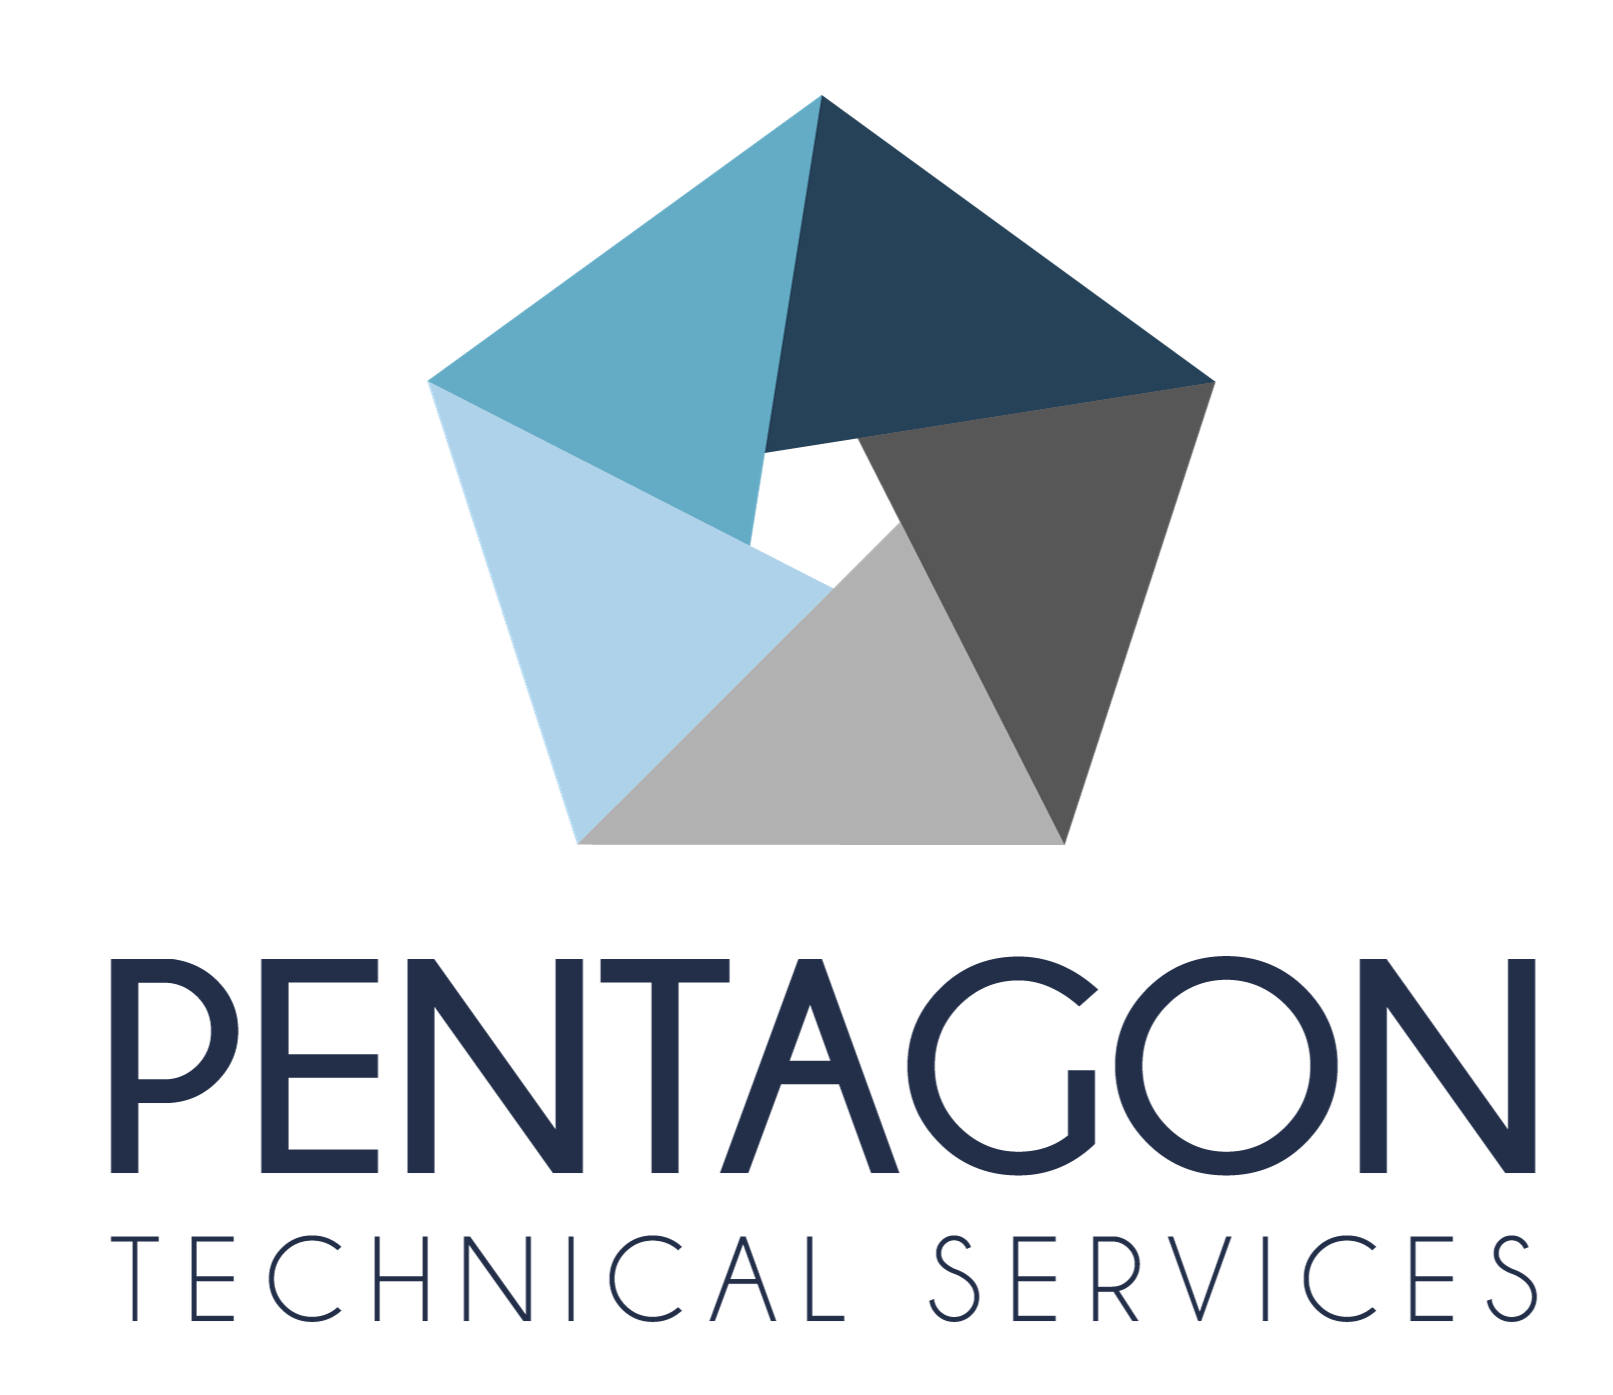 Pentagon Technical Services